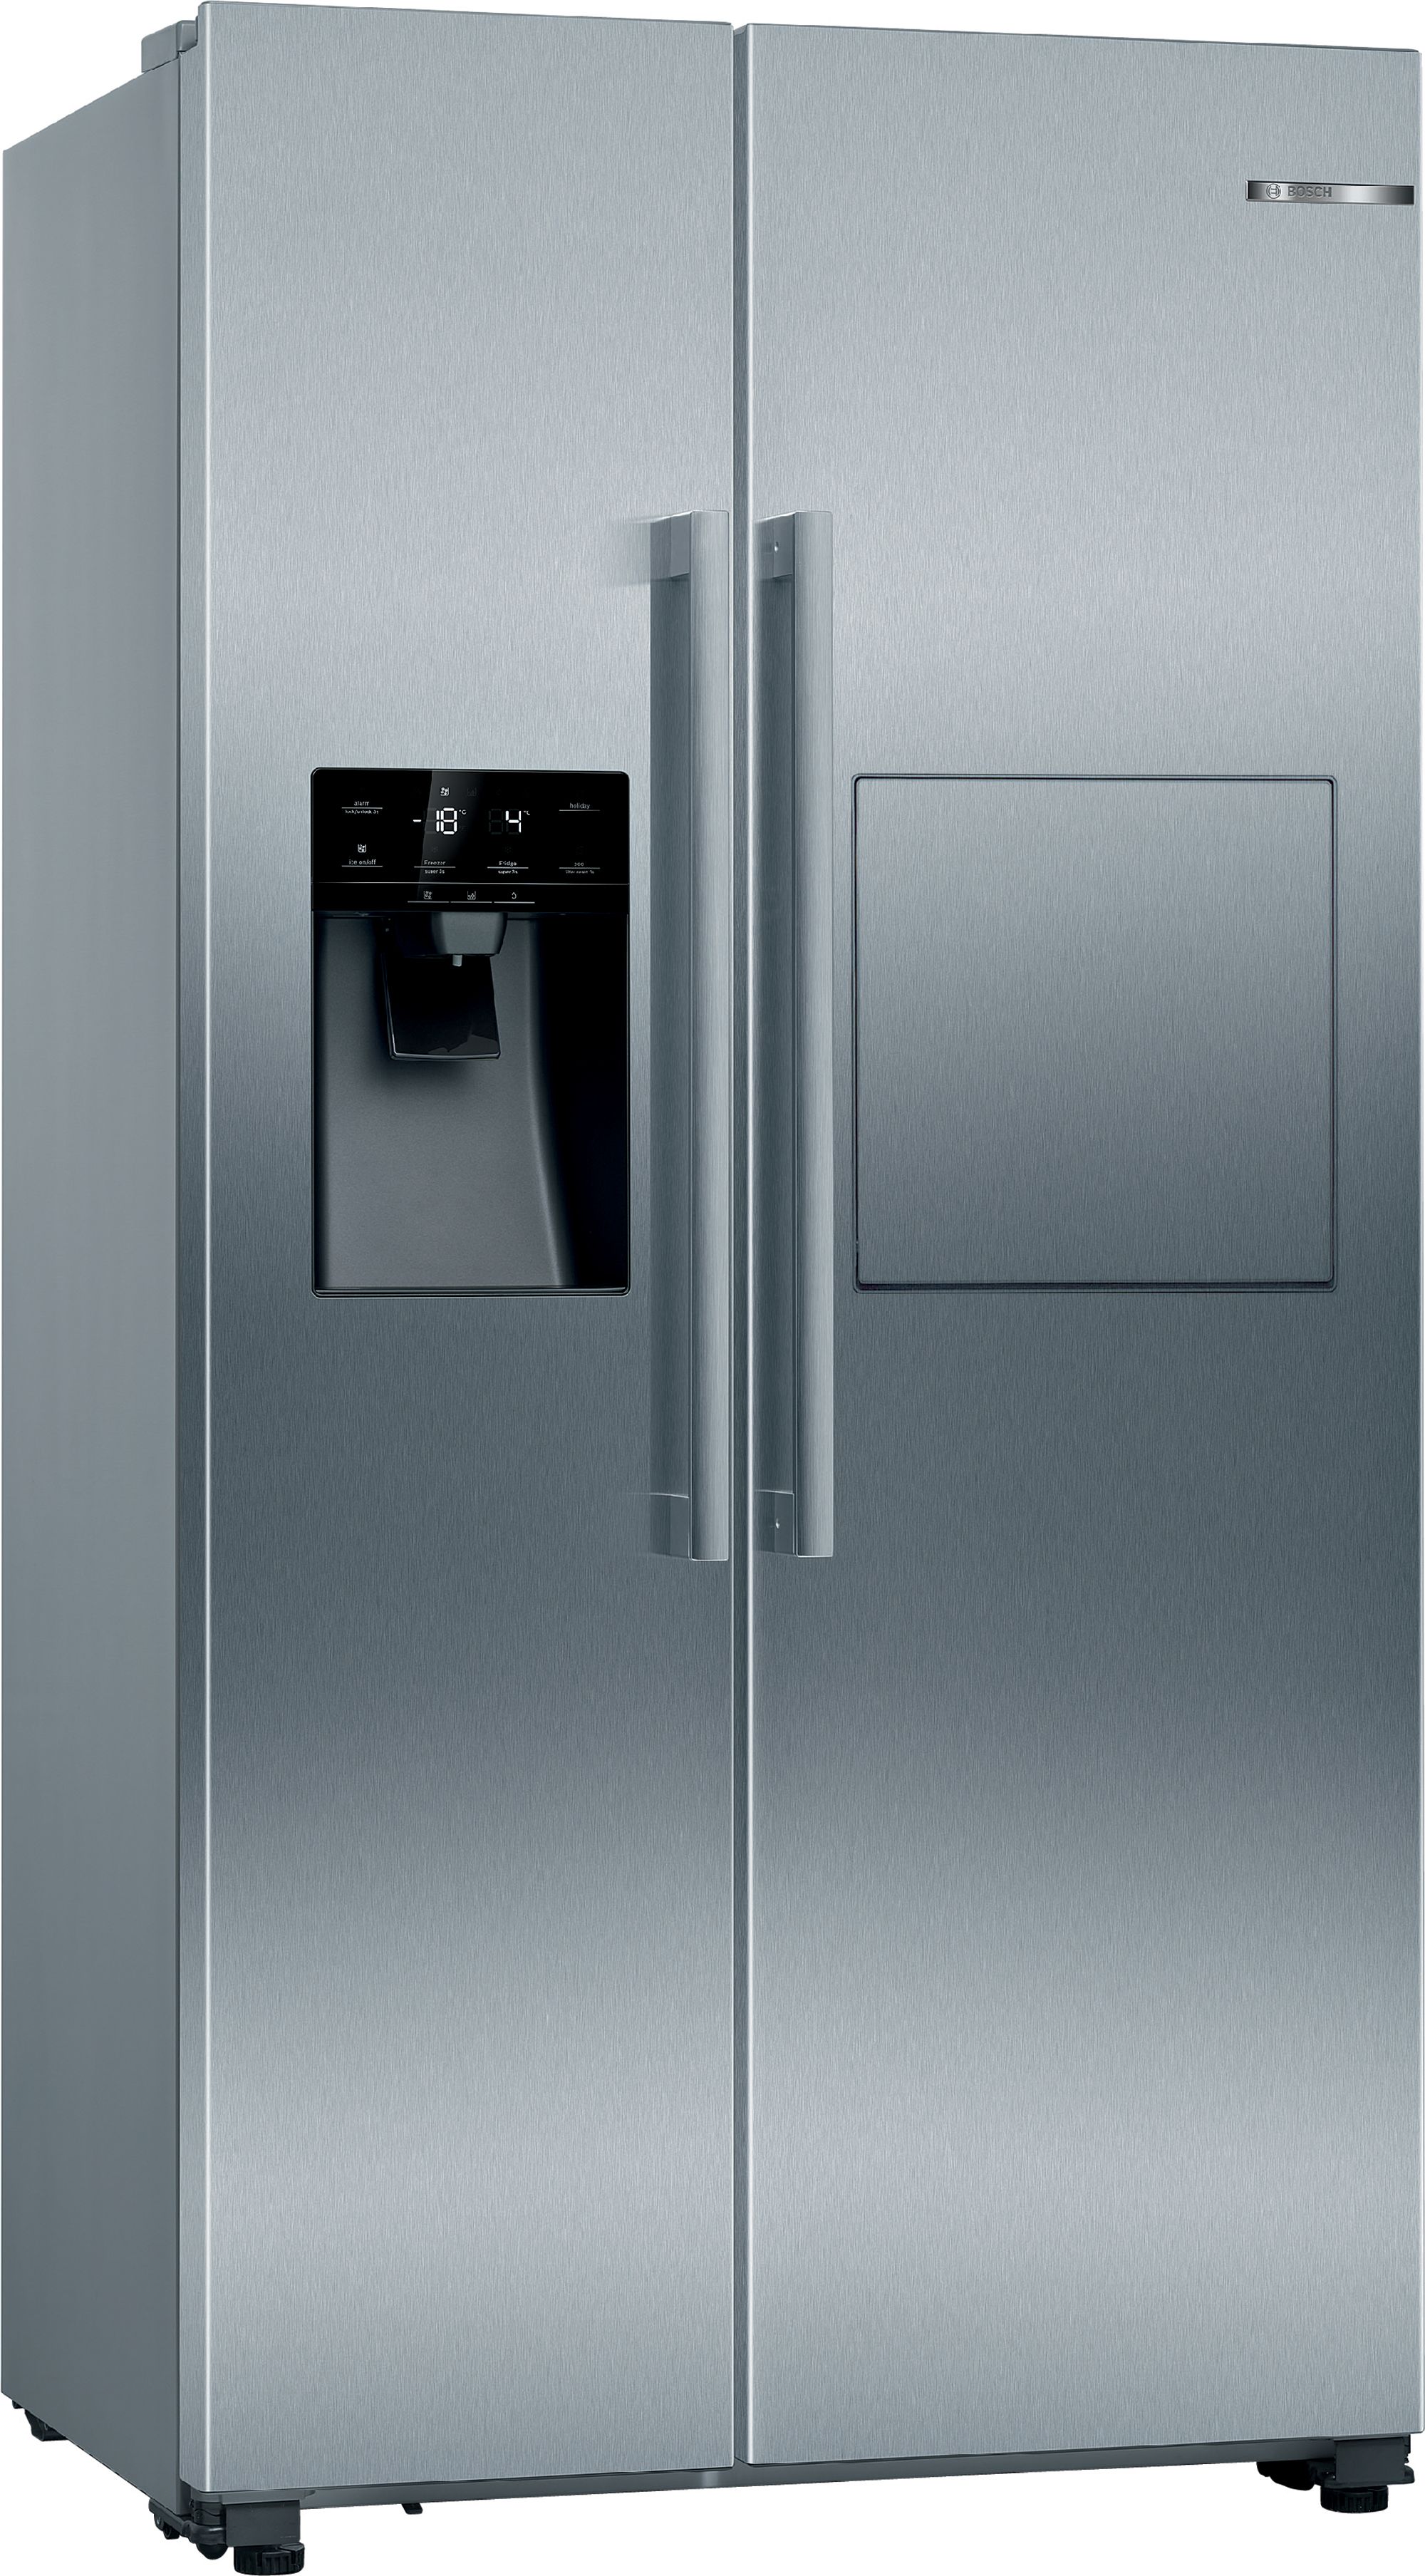 Bosch KAG93AIEPG American style Freestanding Frost free Fridge freezer - Silver stainless steel effect